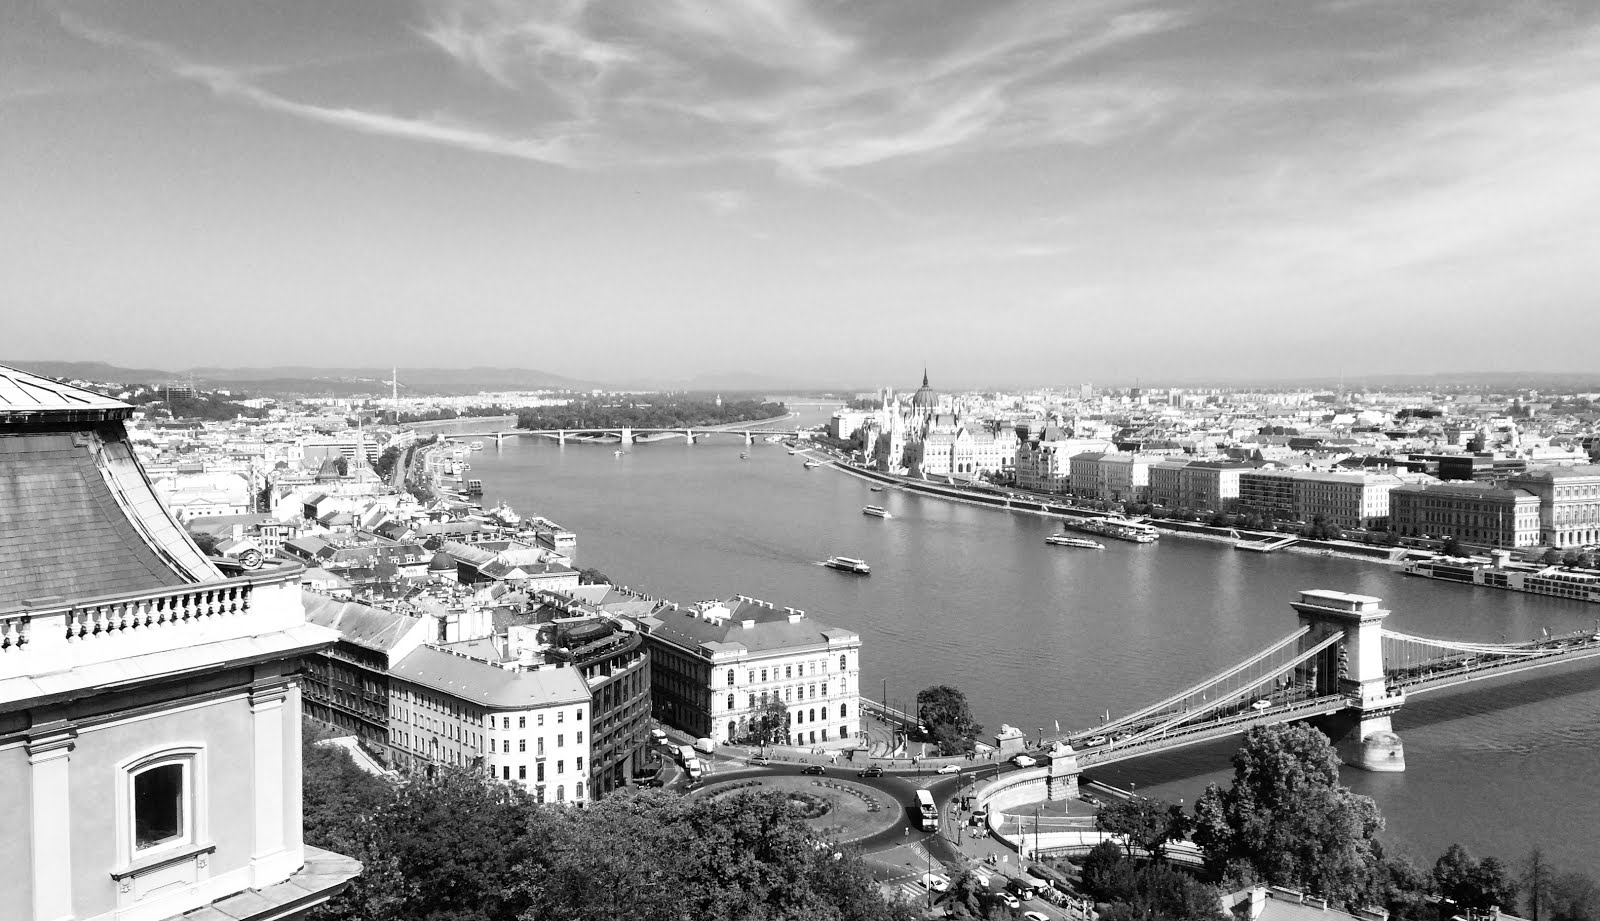 A Lyrical Sail through History on the Danube